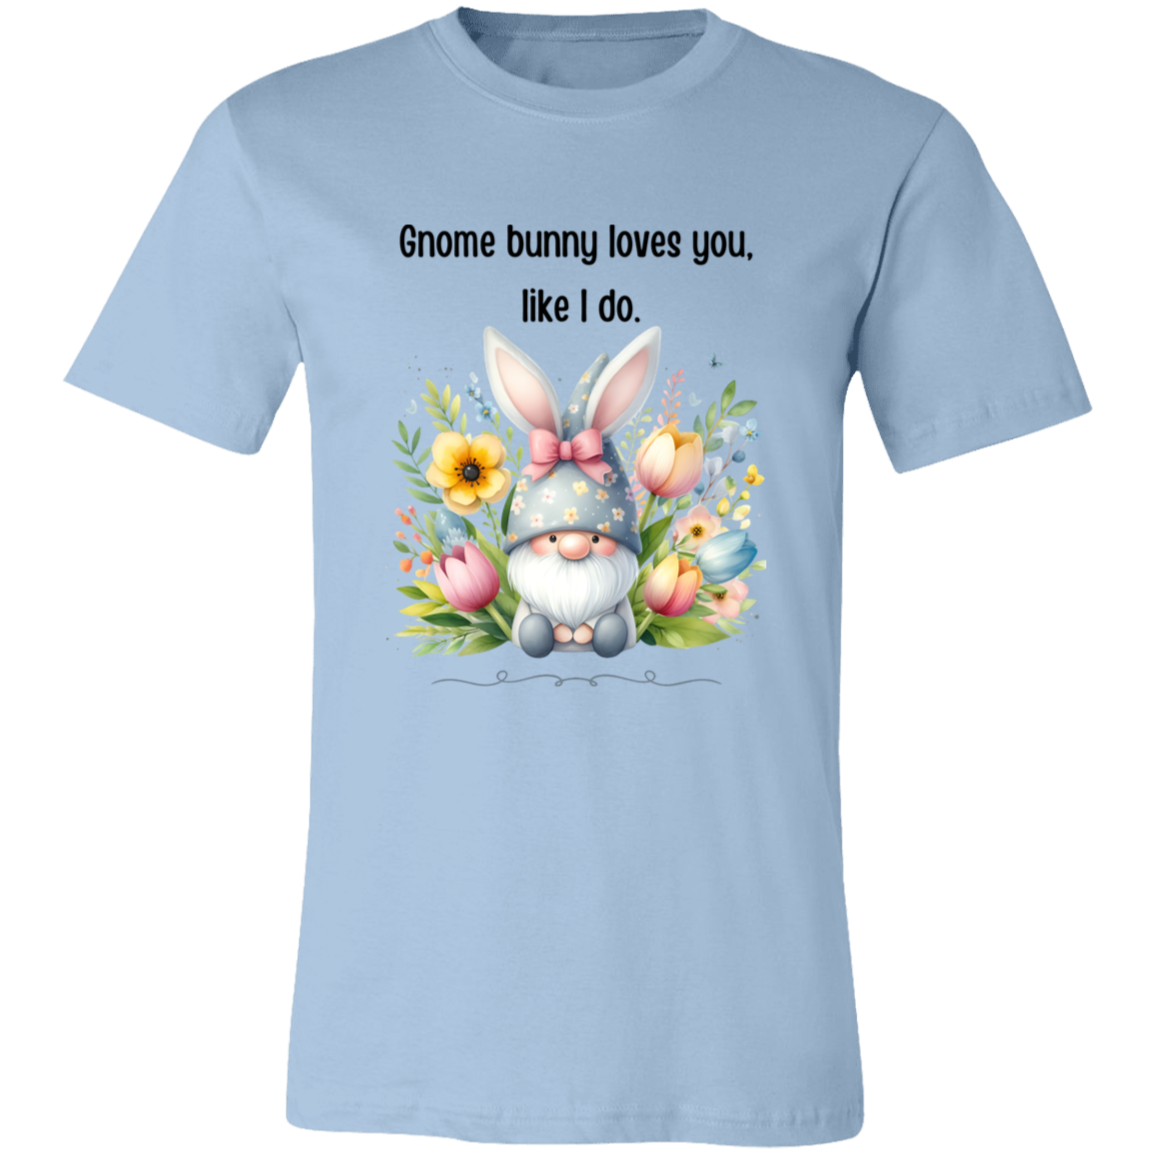 Gnome bunny loves you, like I do T-shirt Short sleeve, easter gnome, funny shirt unisex